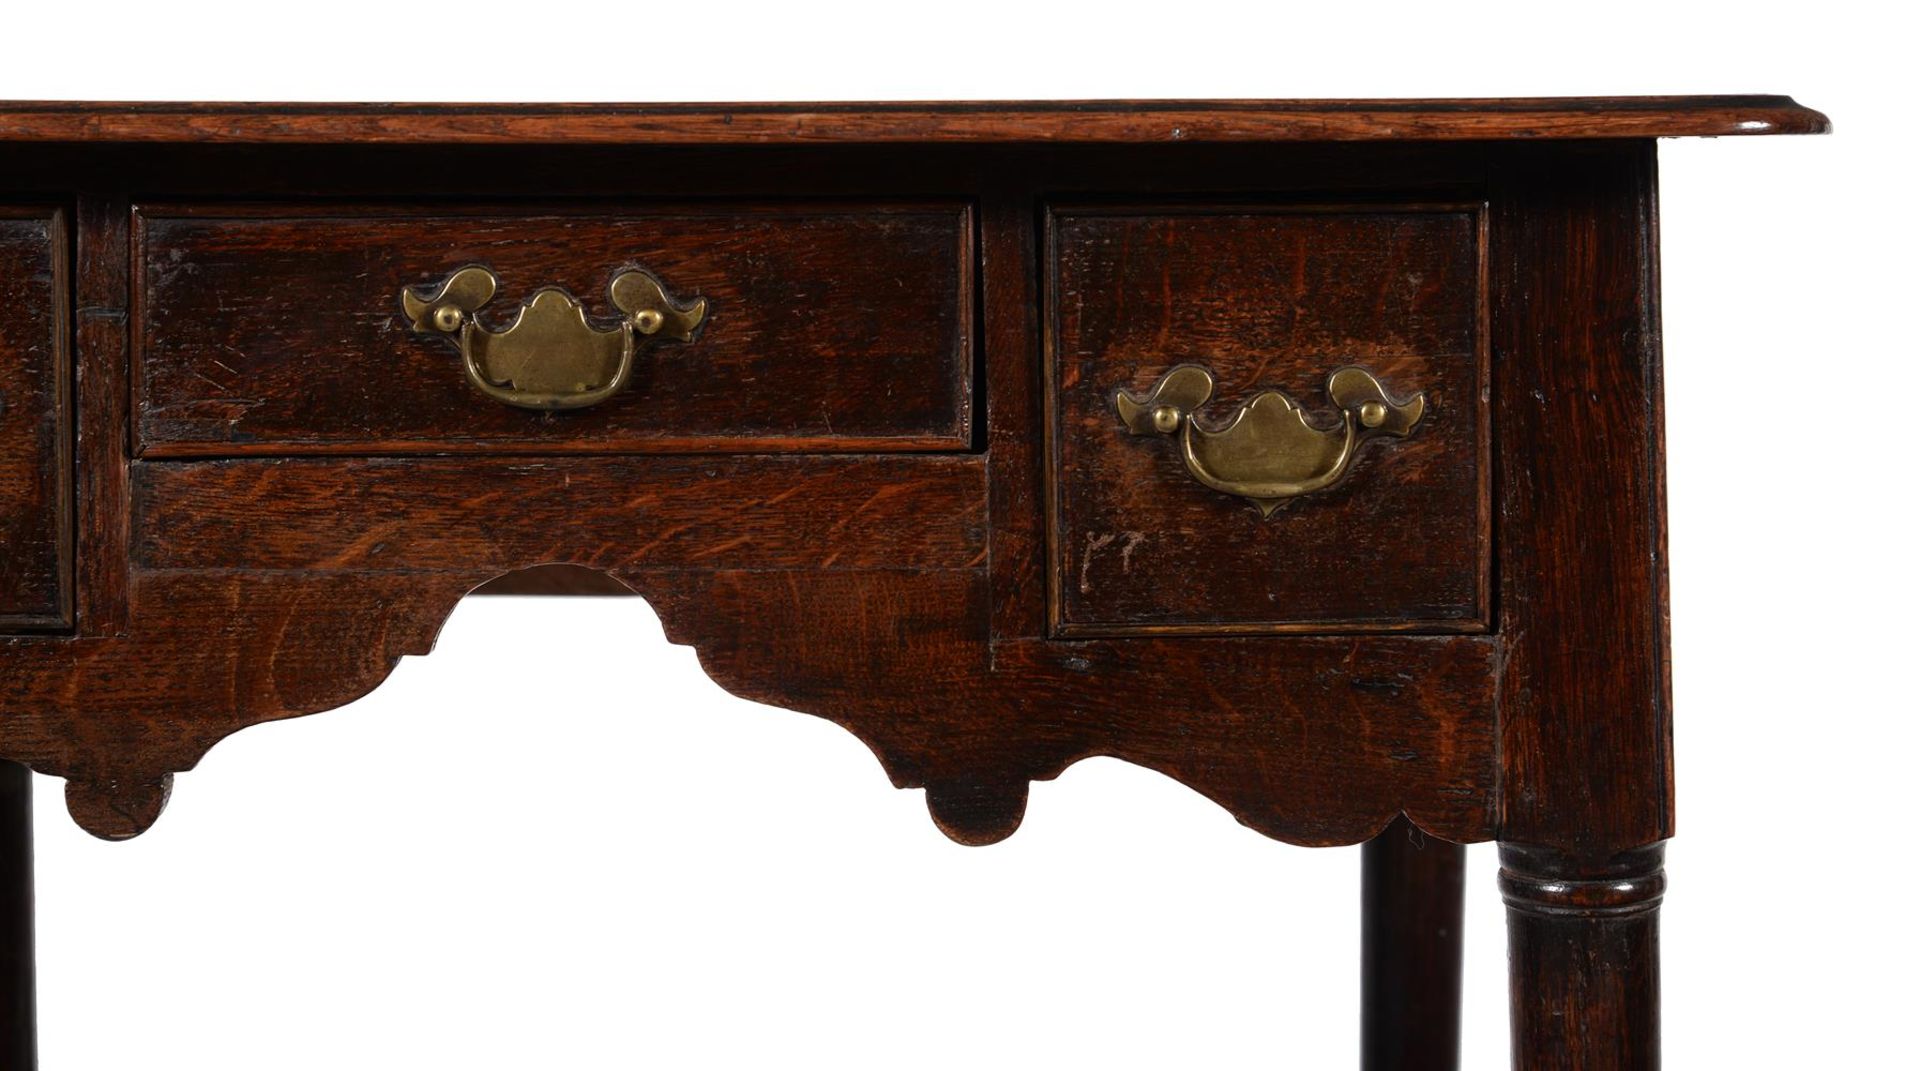 A George II oak side table or lowboy - Image 2 of 3